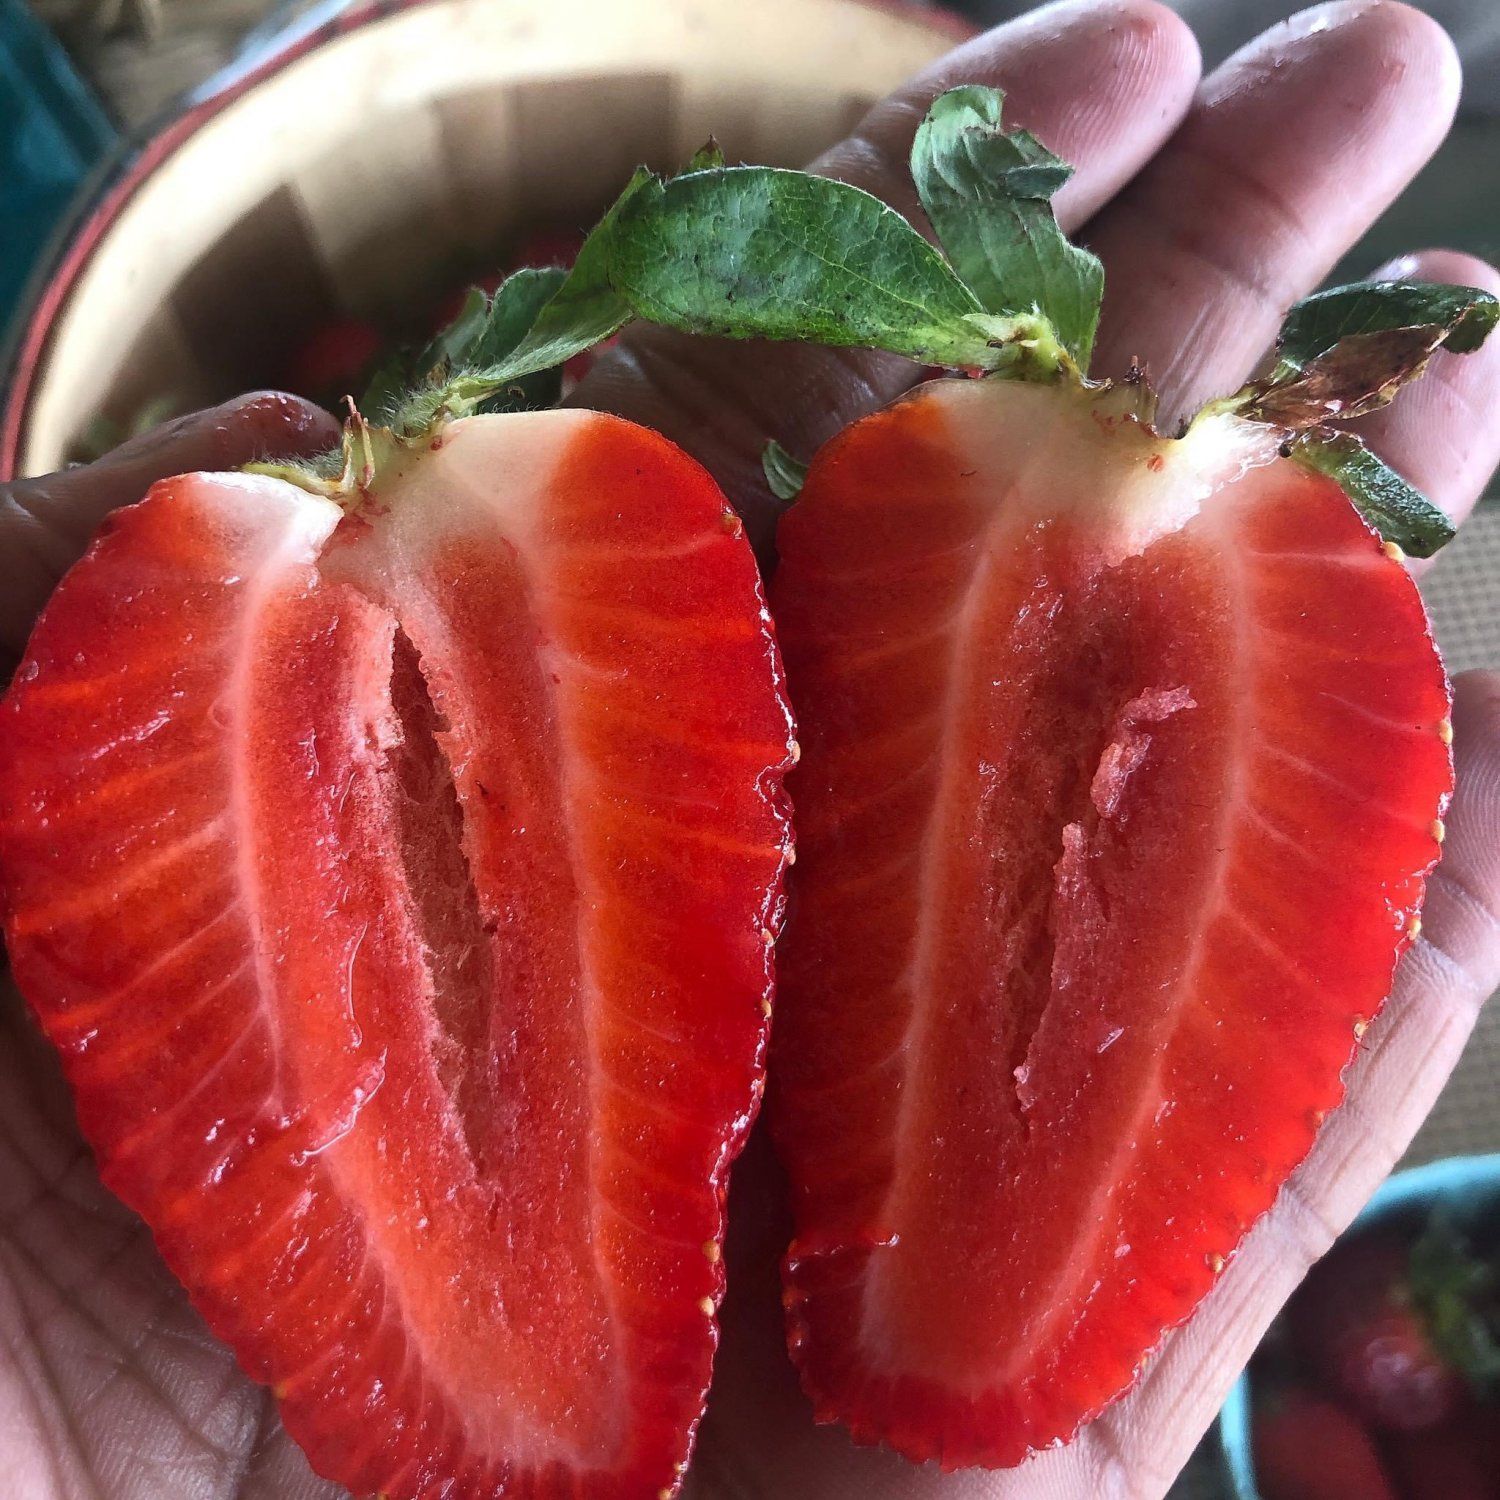 Georgia-Grown Strawberries are Here!